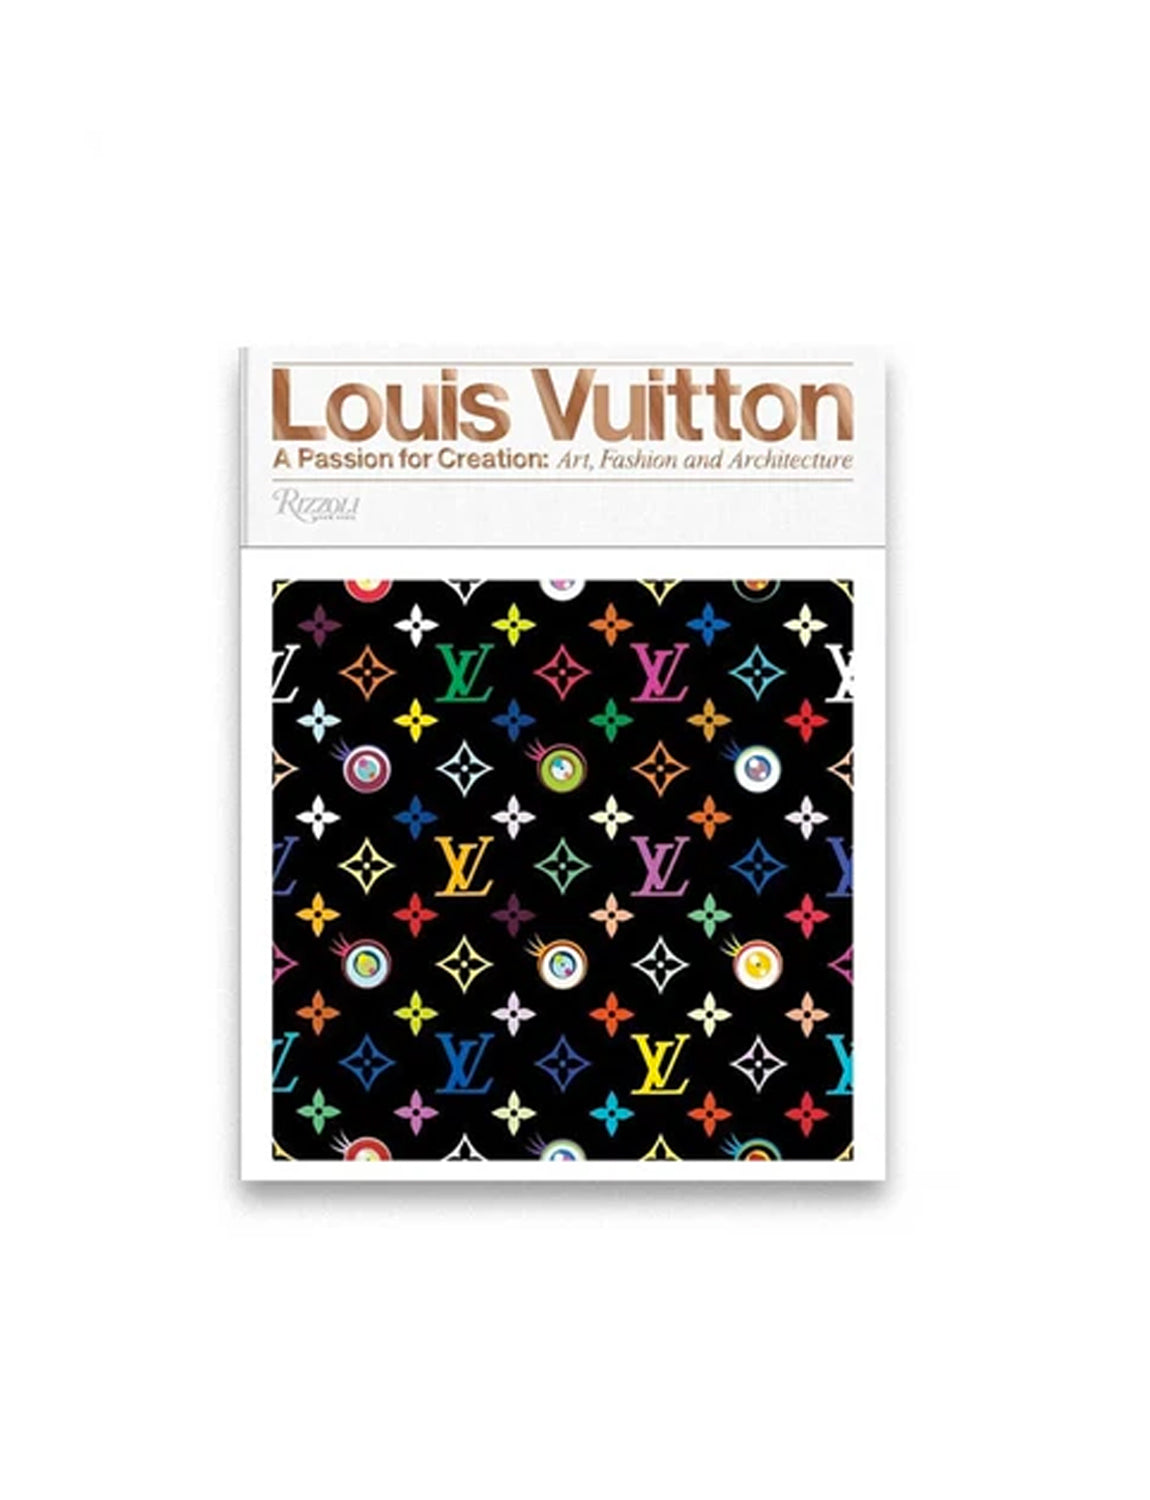 Louis Vuitton Catwalk by Author